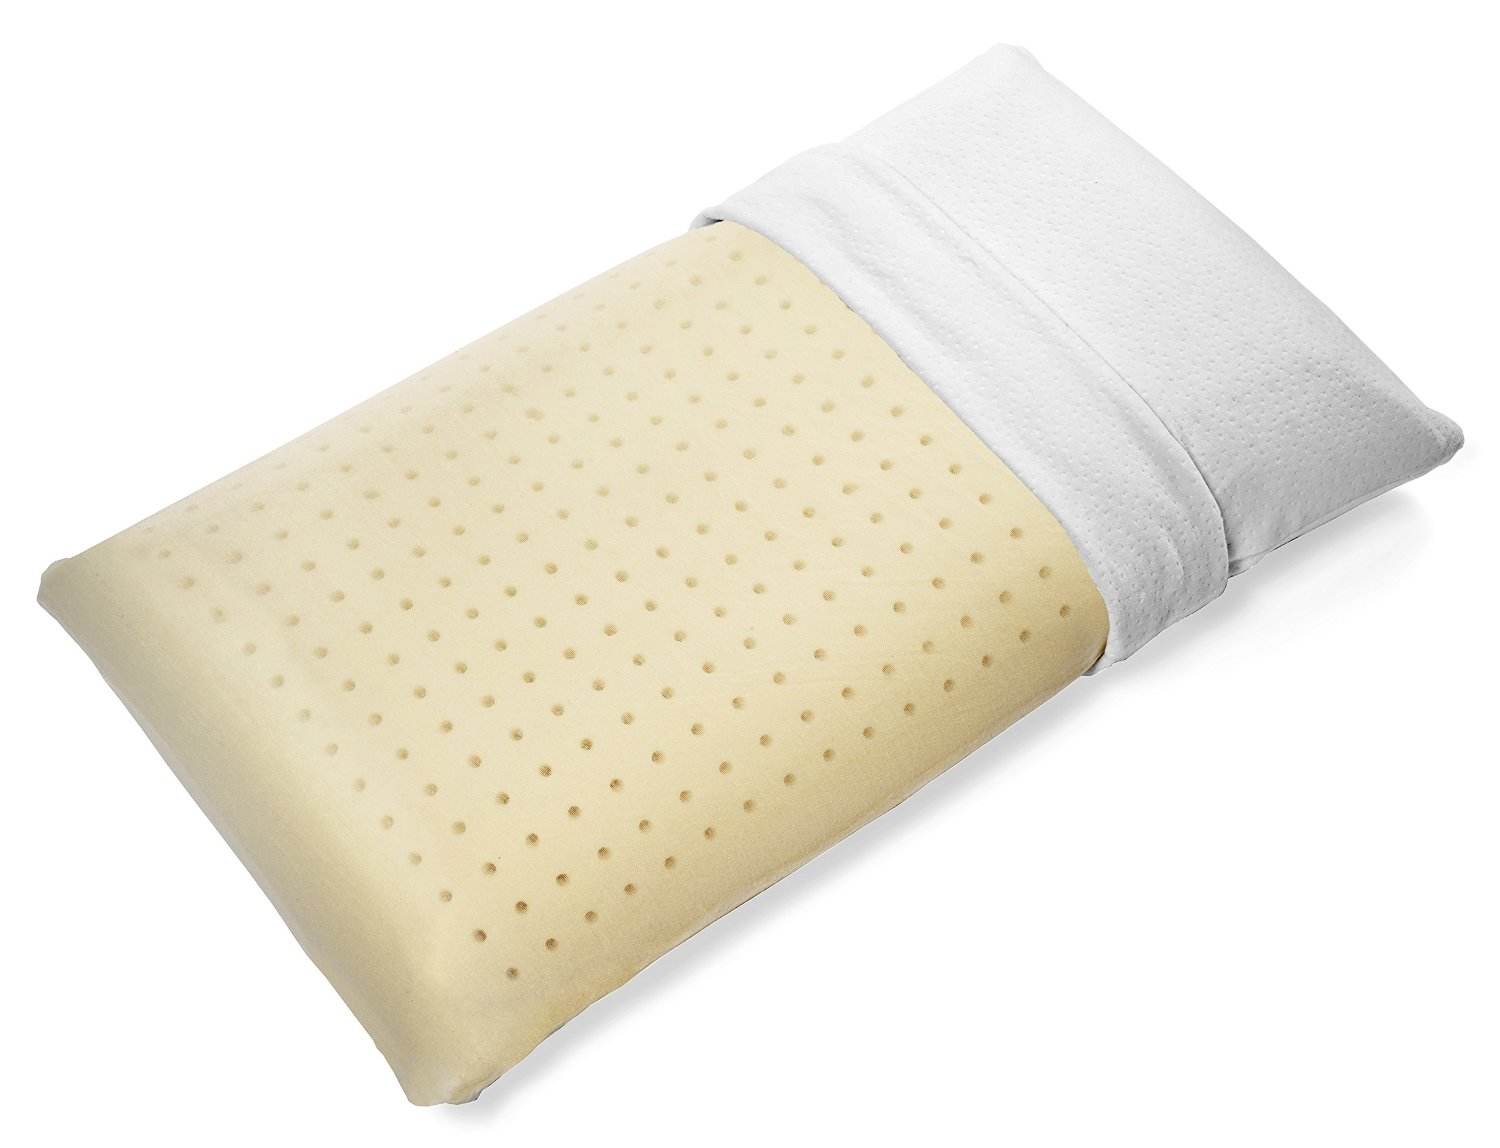 foam pillow memory latex pillows sleeping bed king versus environment ultimate create holes aeris gel ventilated washable teen material sleep